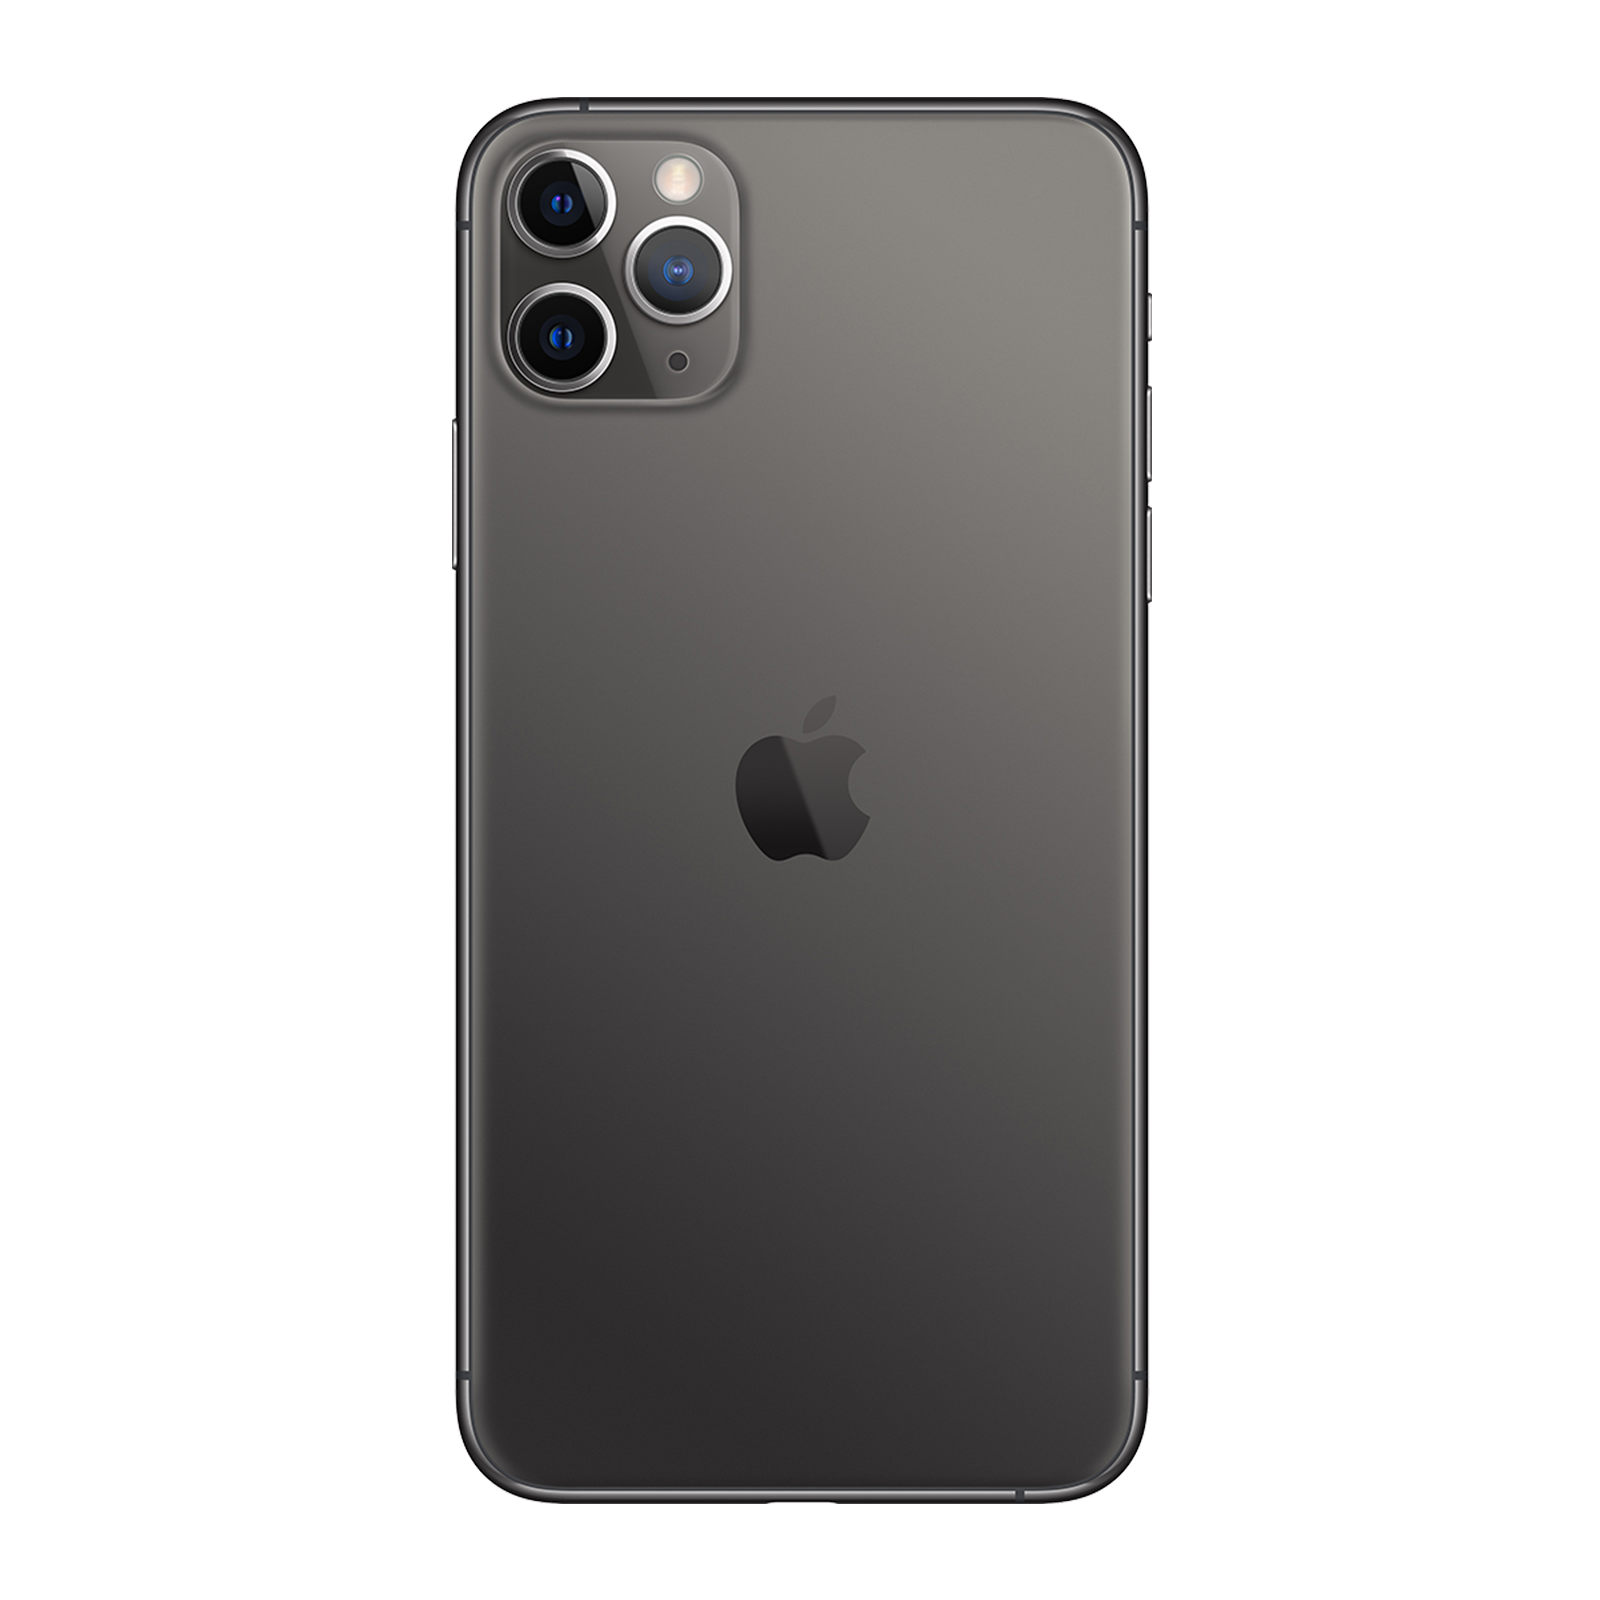 Apple iPhone 11 Pro 512GB Space Grey Good - Unlocked